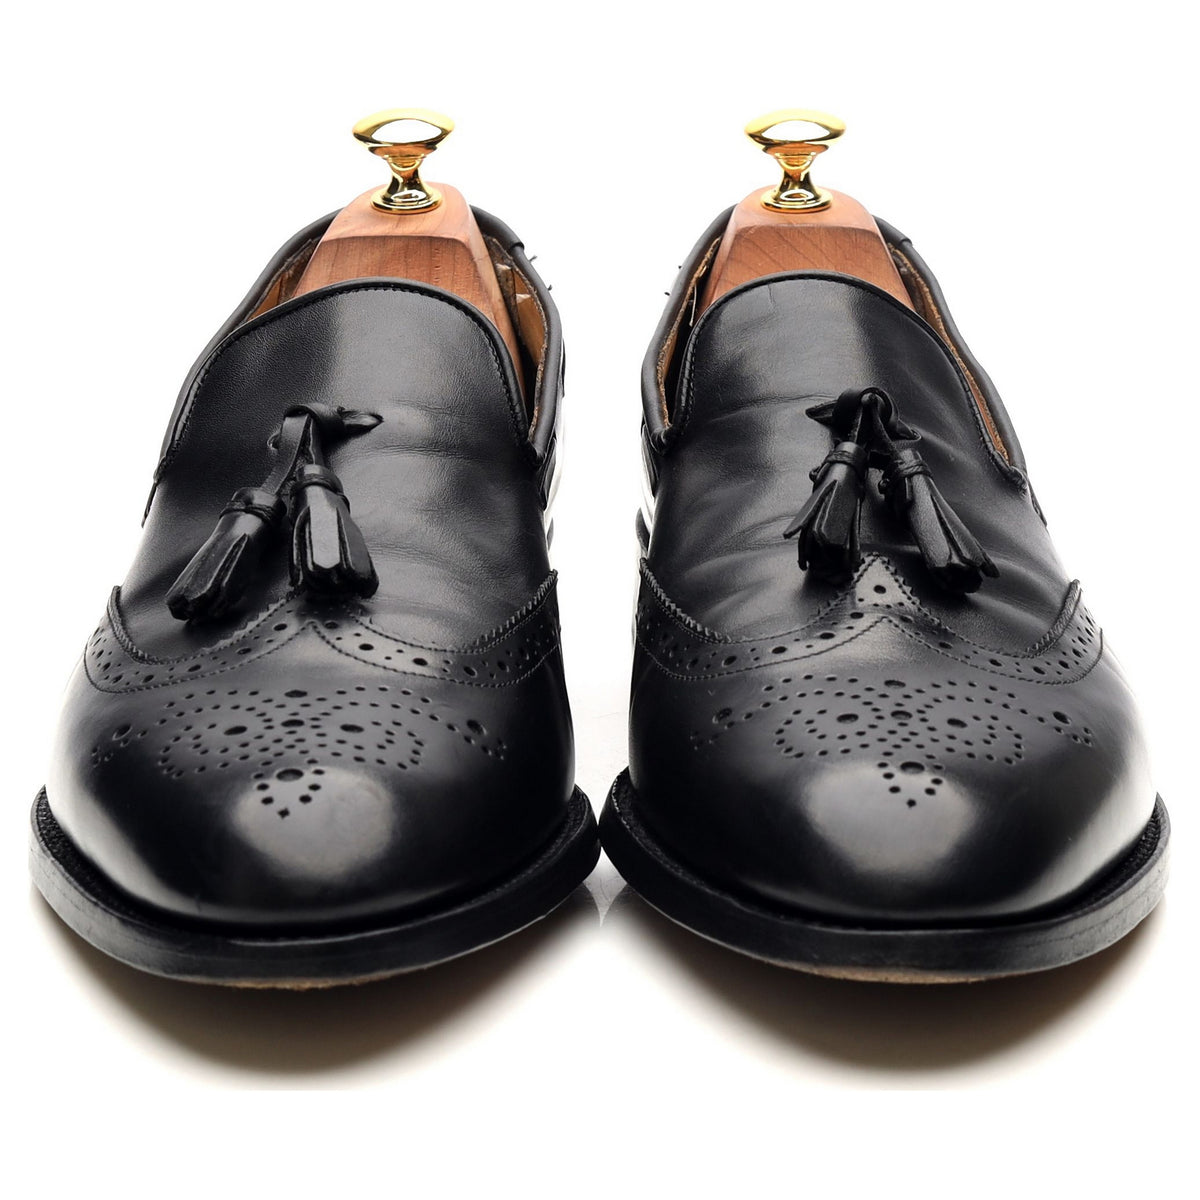 Black Leather Wing Cap Tassel Loafers UK 10 F